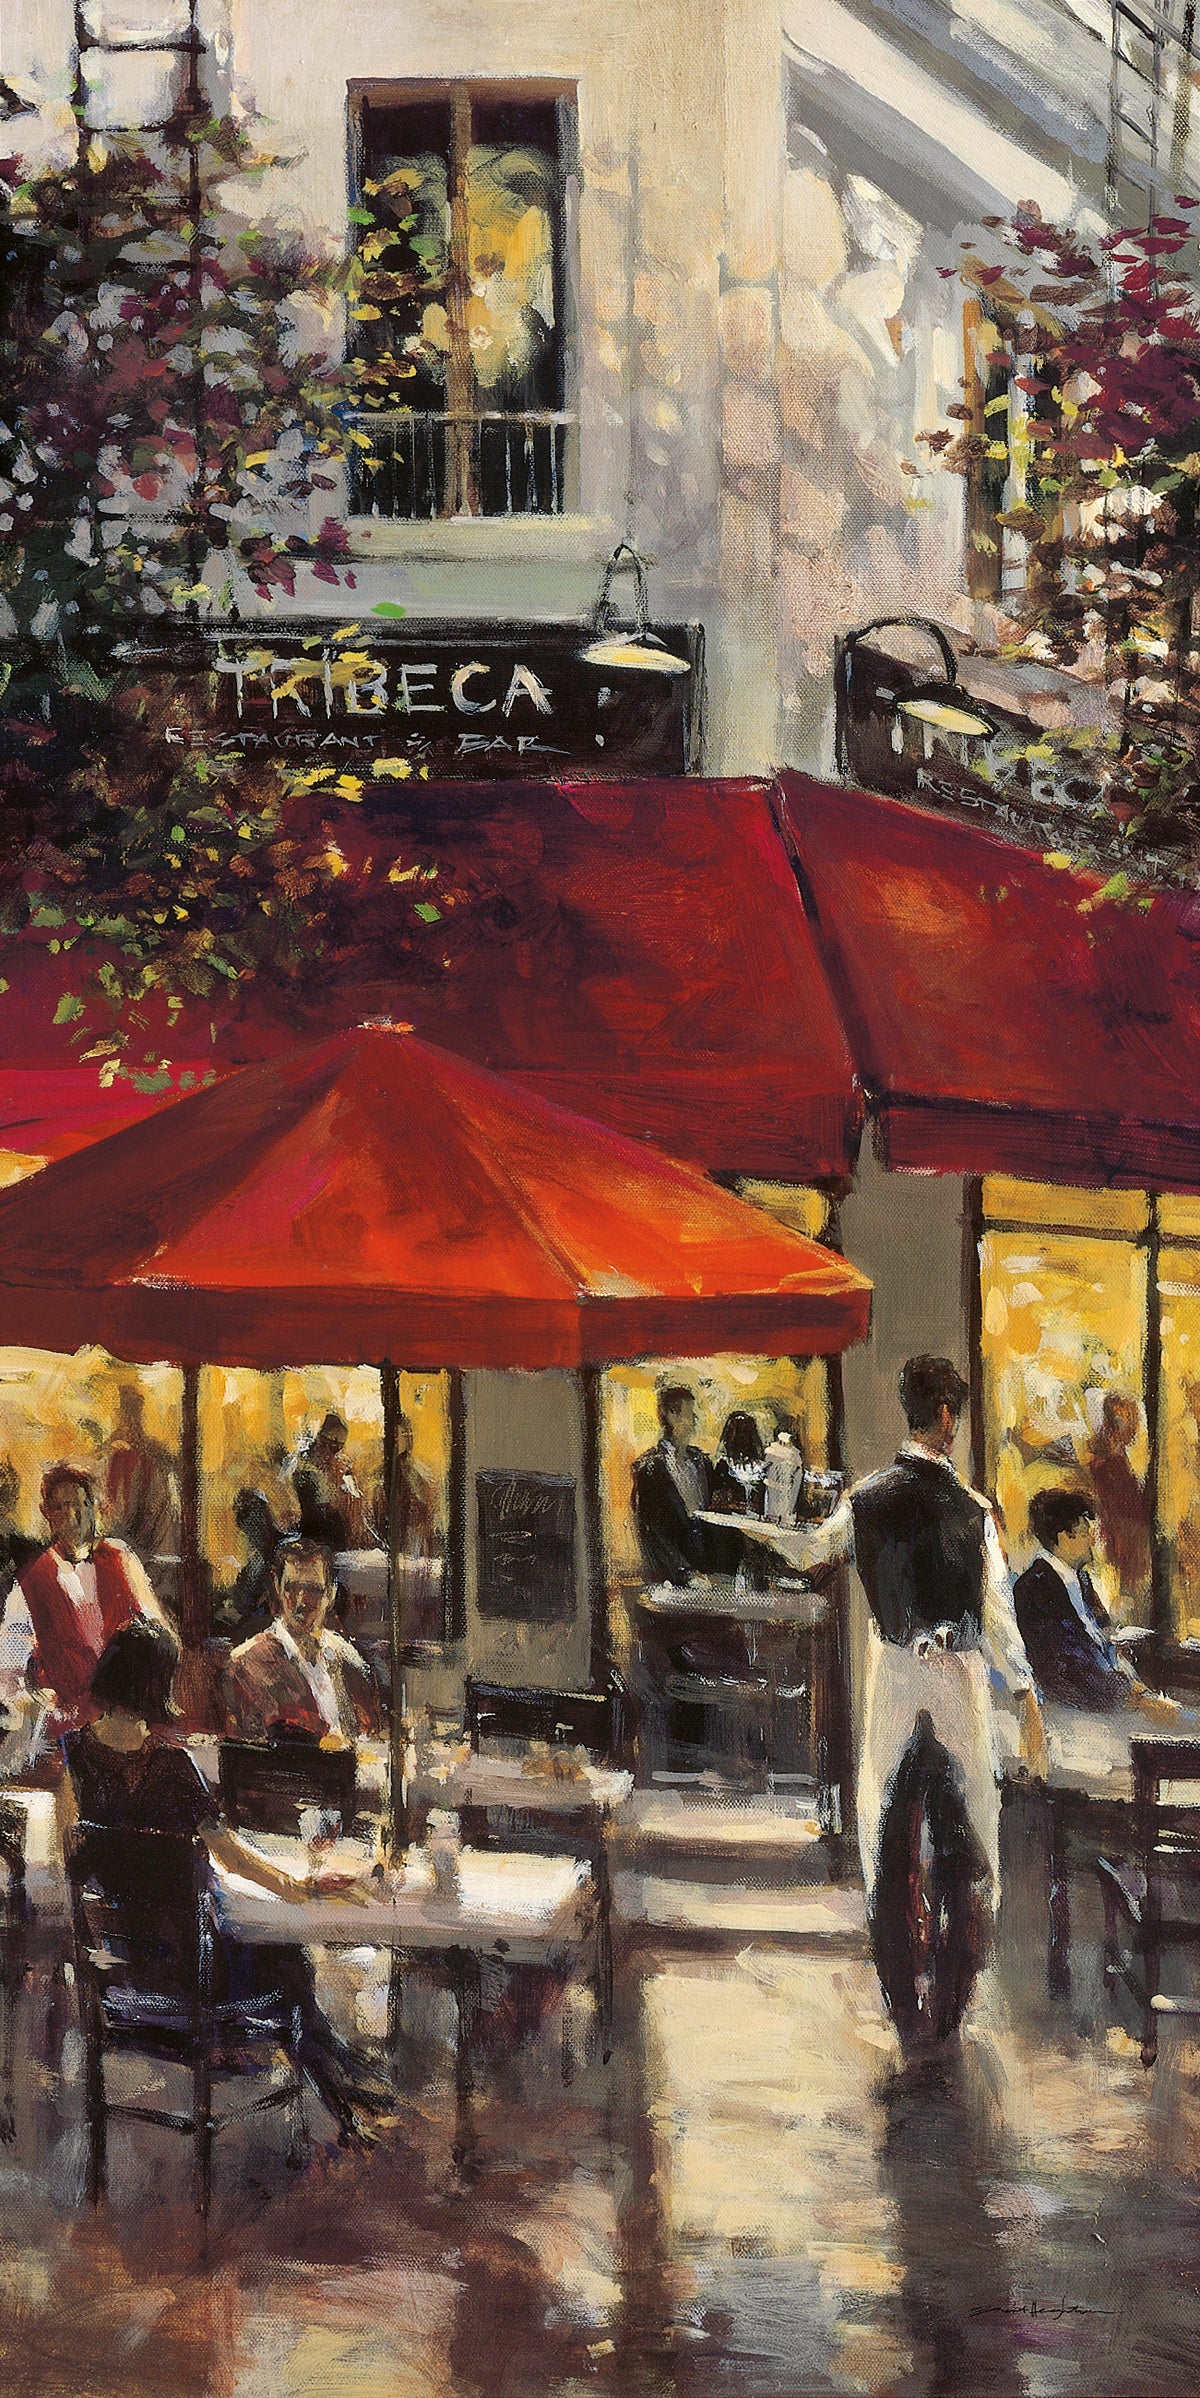 Brent Heighton - Tribeca Bar